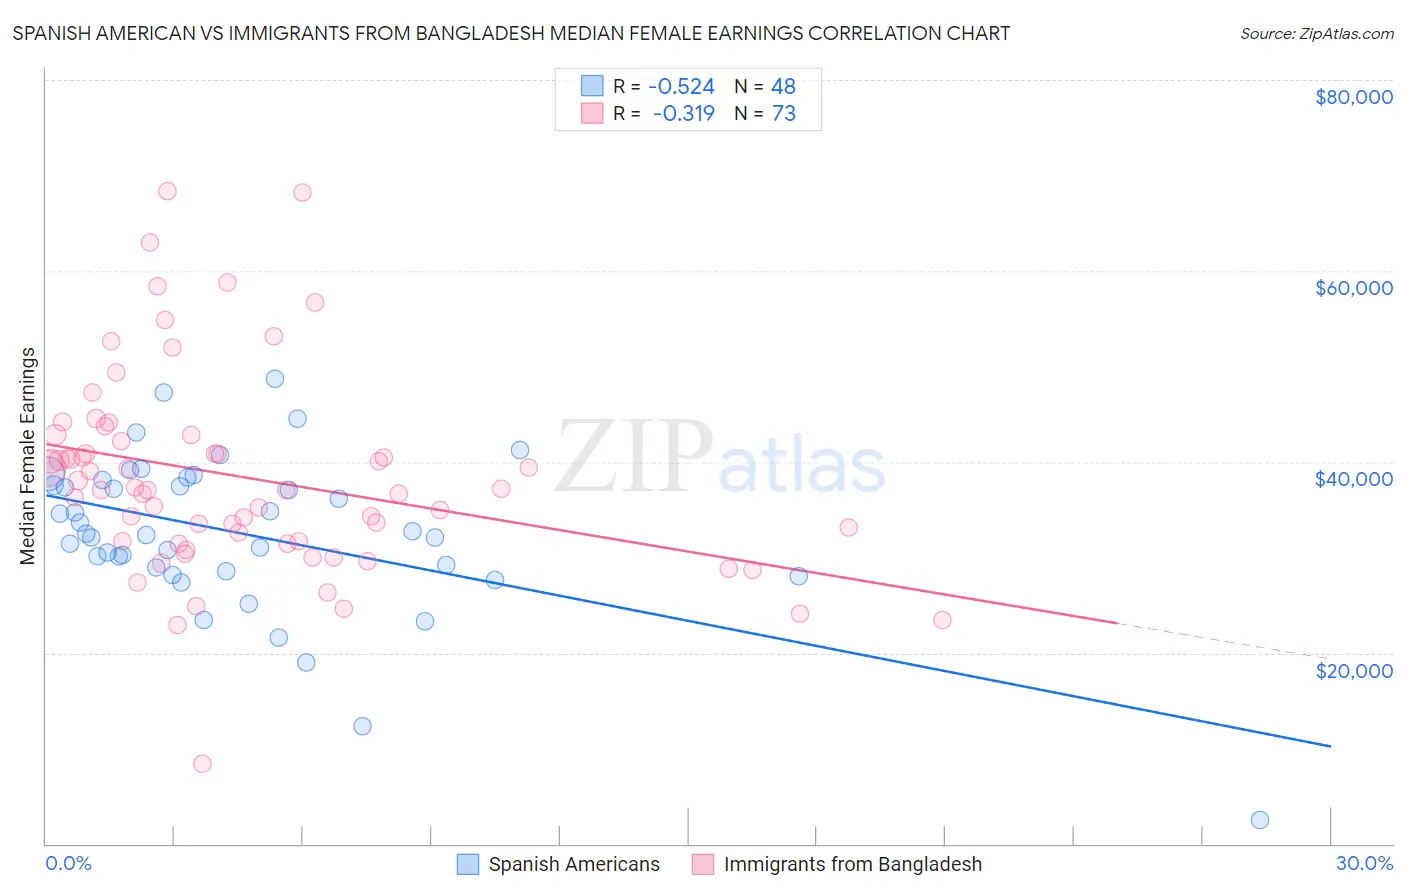 Spanish American vs Immigrants from Bangladesh Median Female Earnings